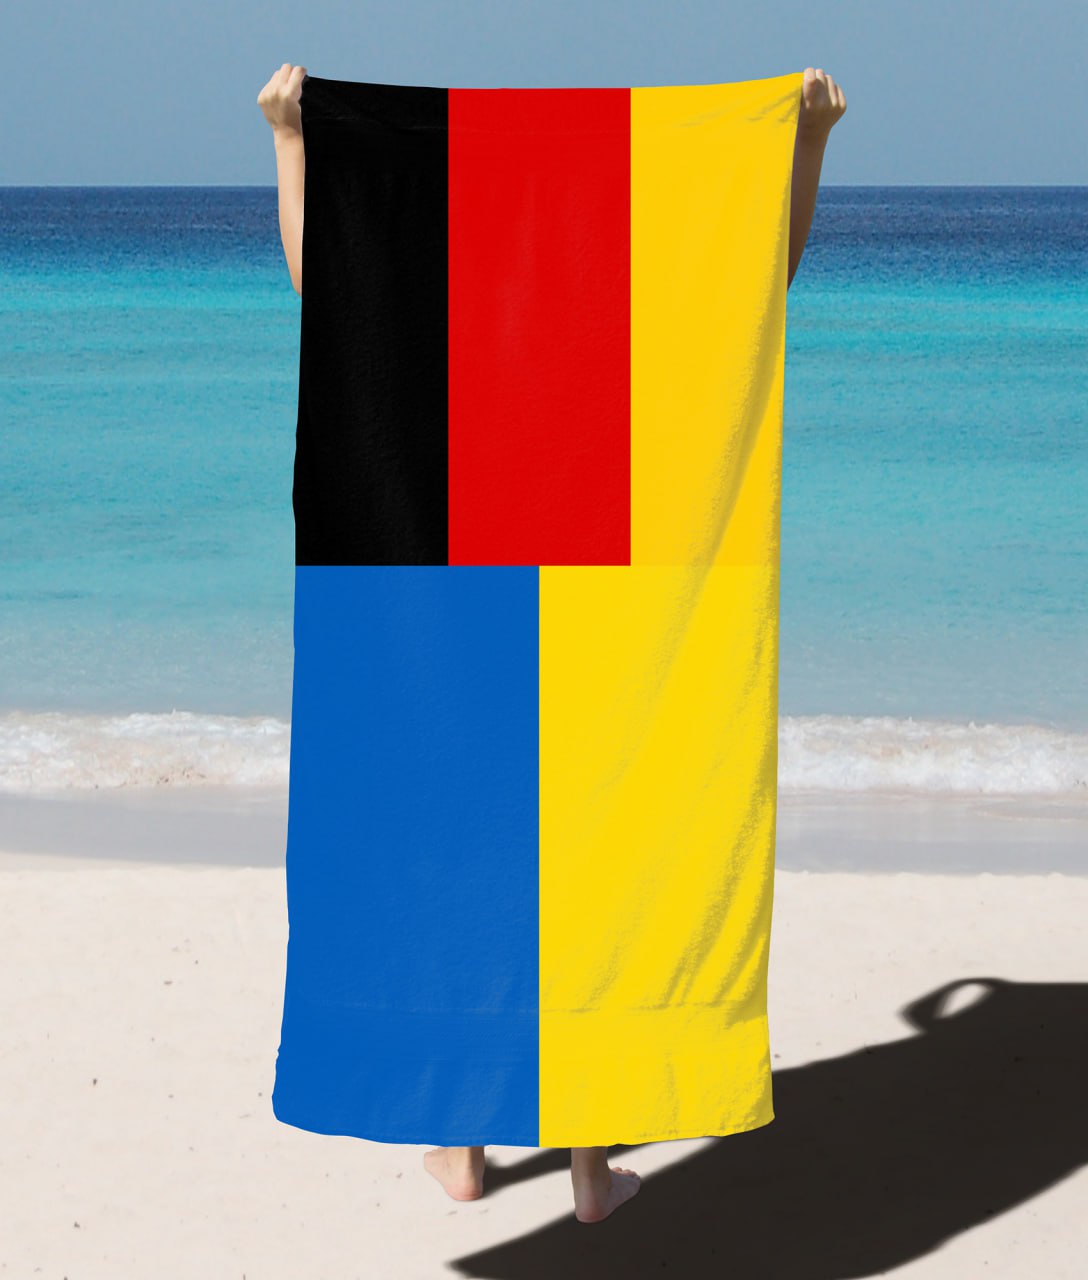 Towels flag of Ukraine + Germany